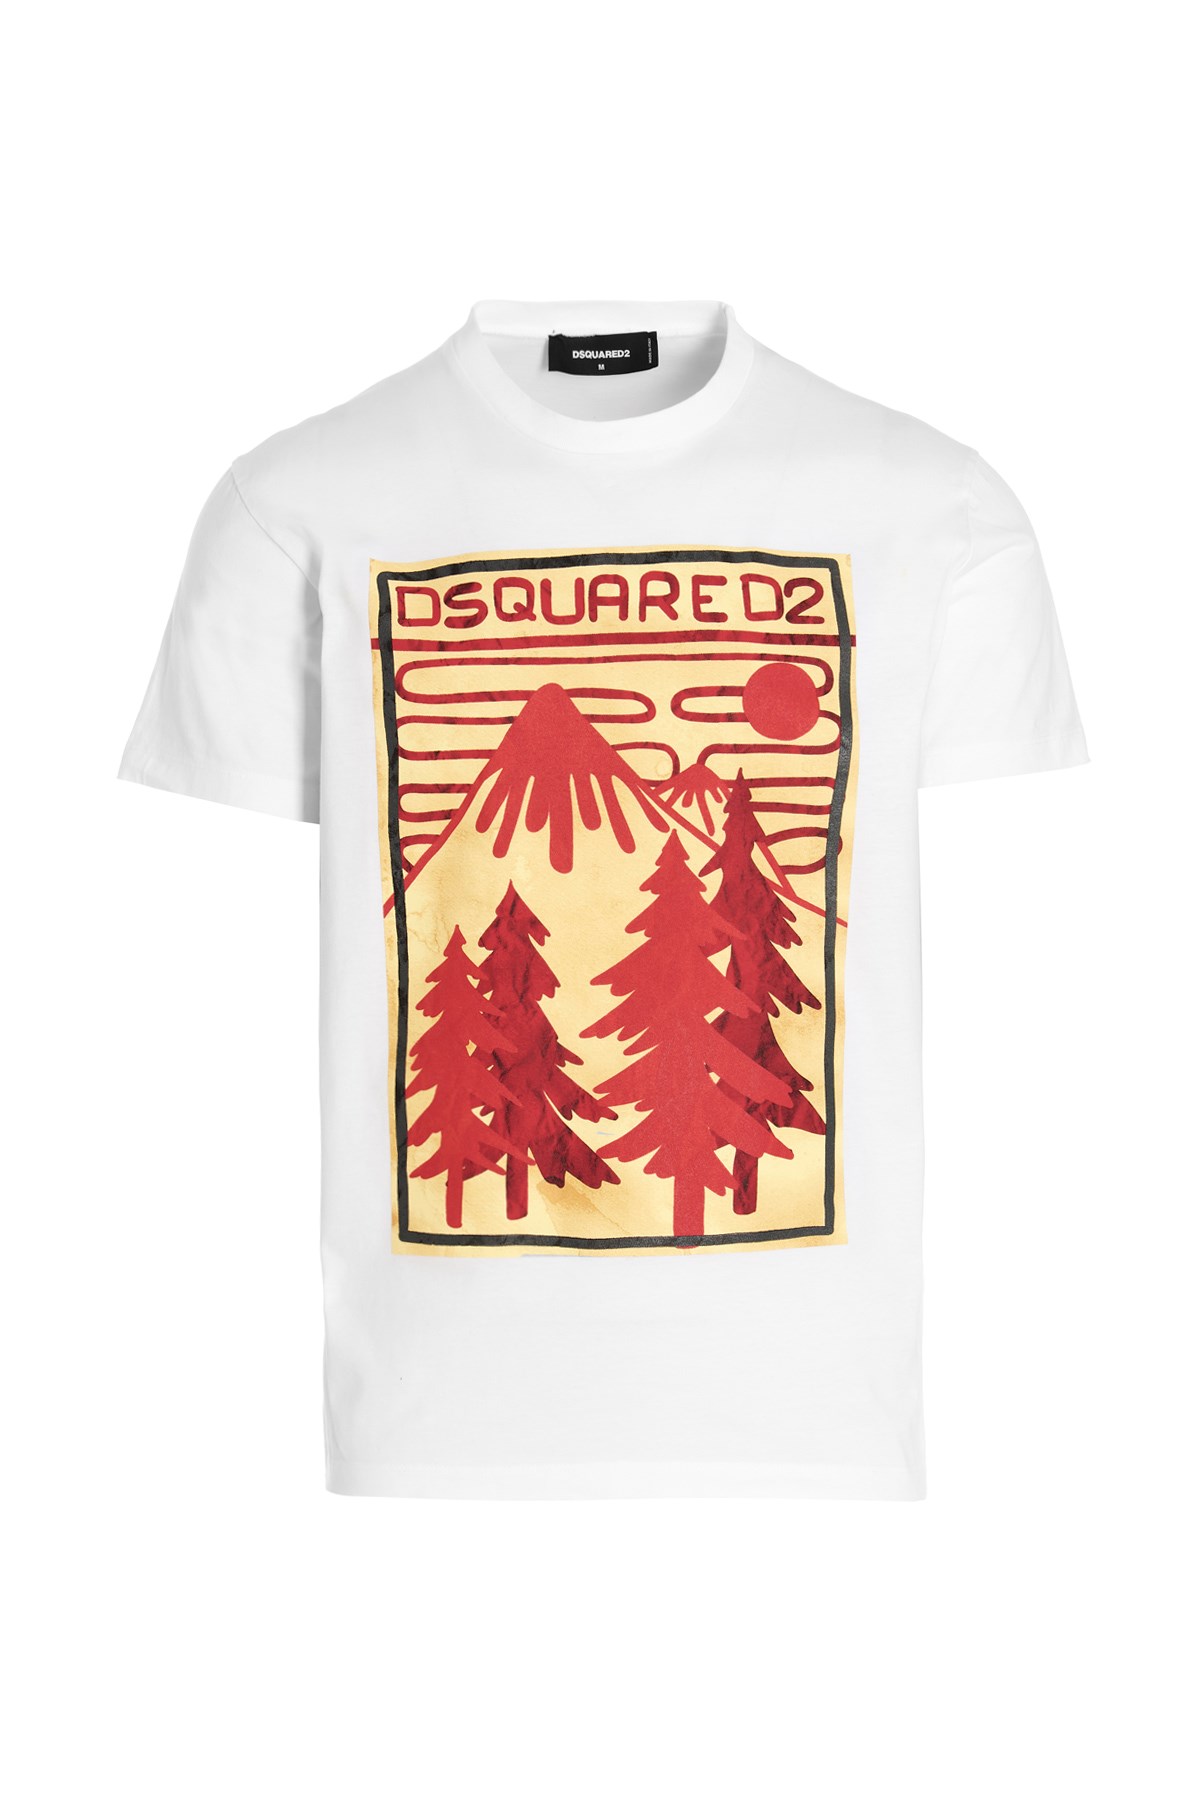 DSQUARED2 T-Shirt 'Mountain’